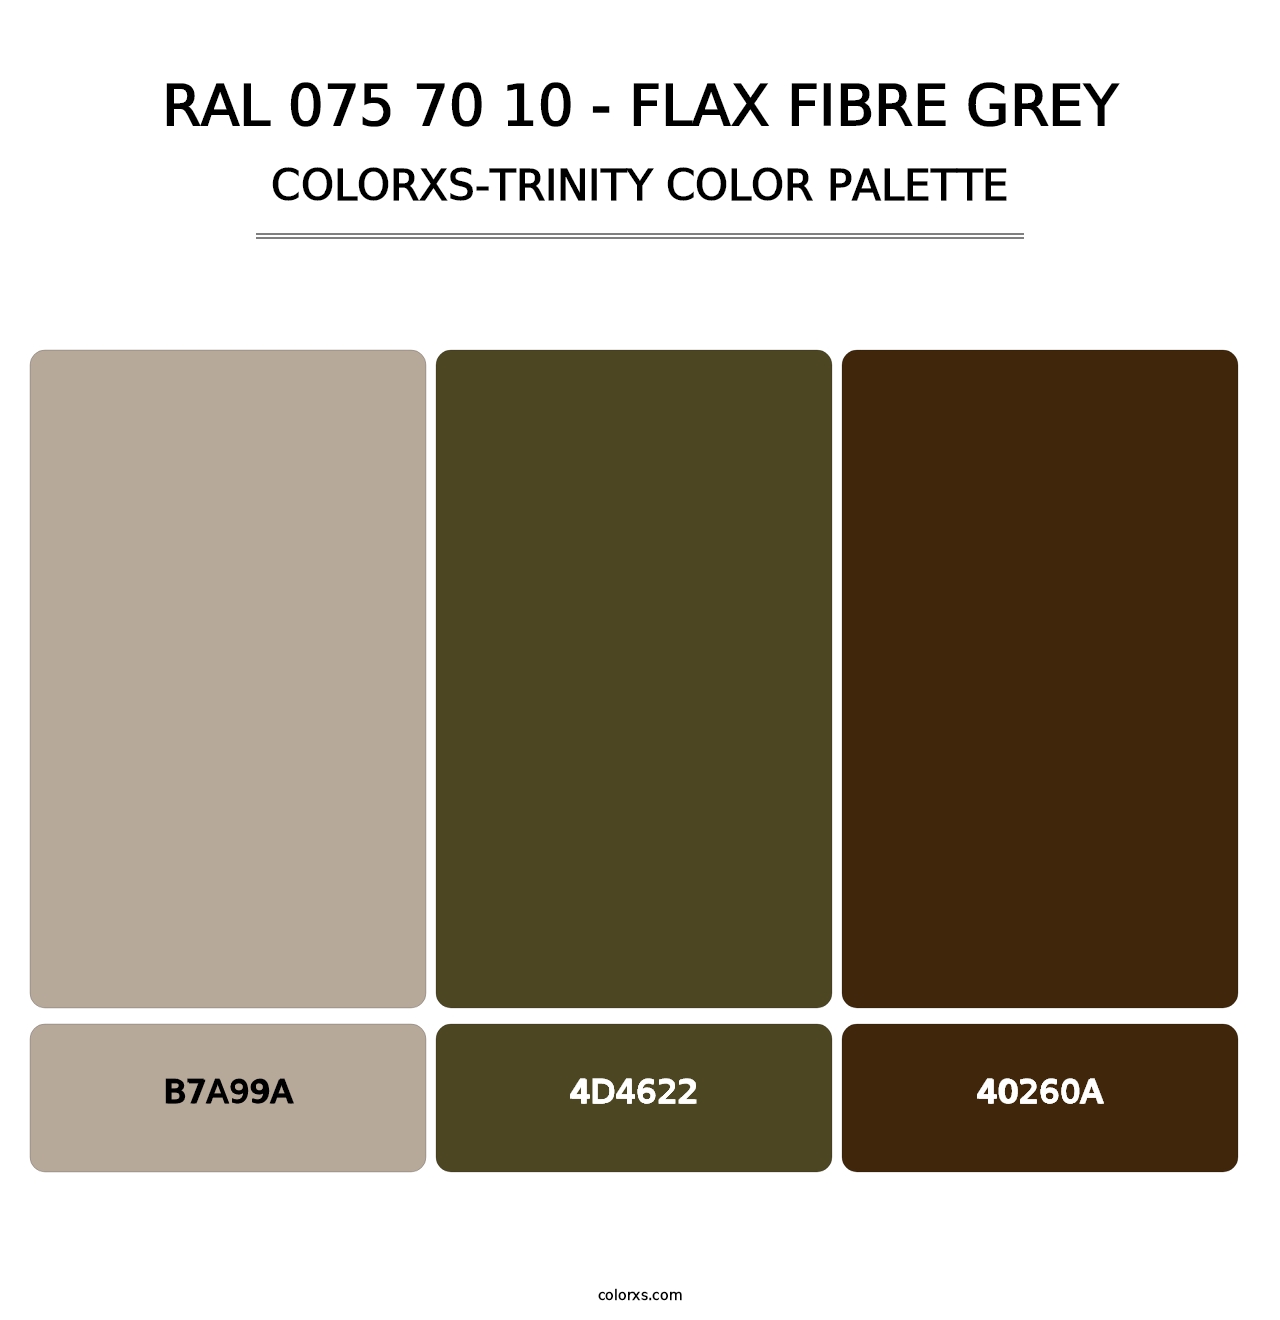 RAL 075 70 10 - Flax Fibre Grey - Colorxs Trinity Palette